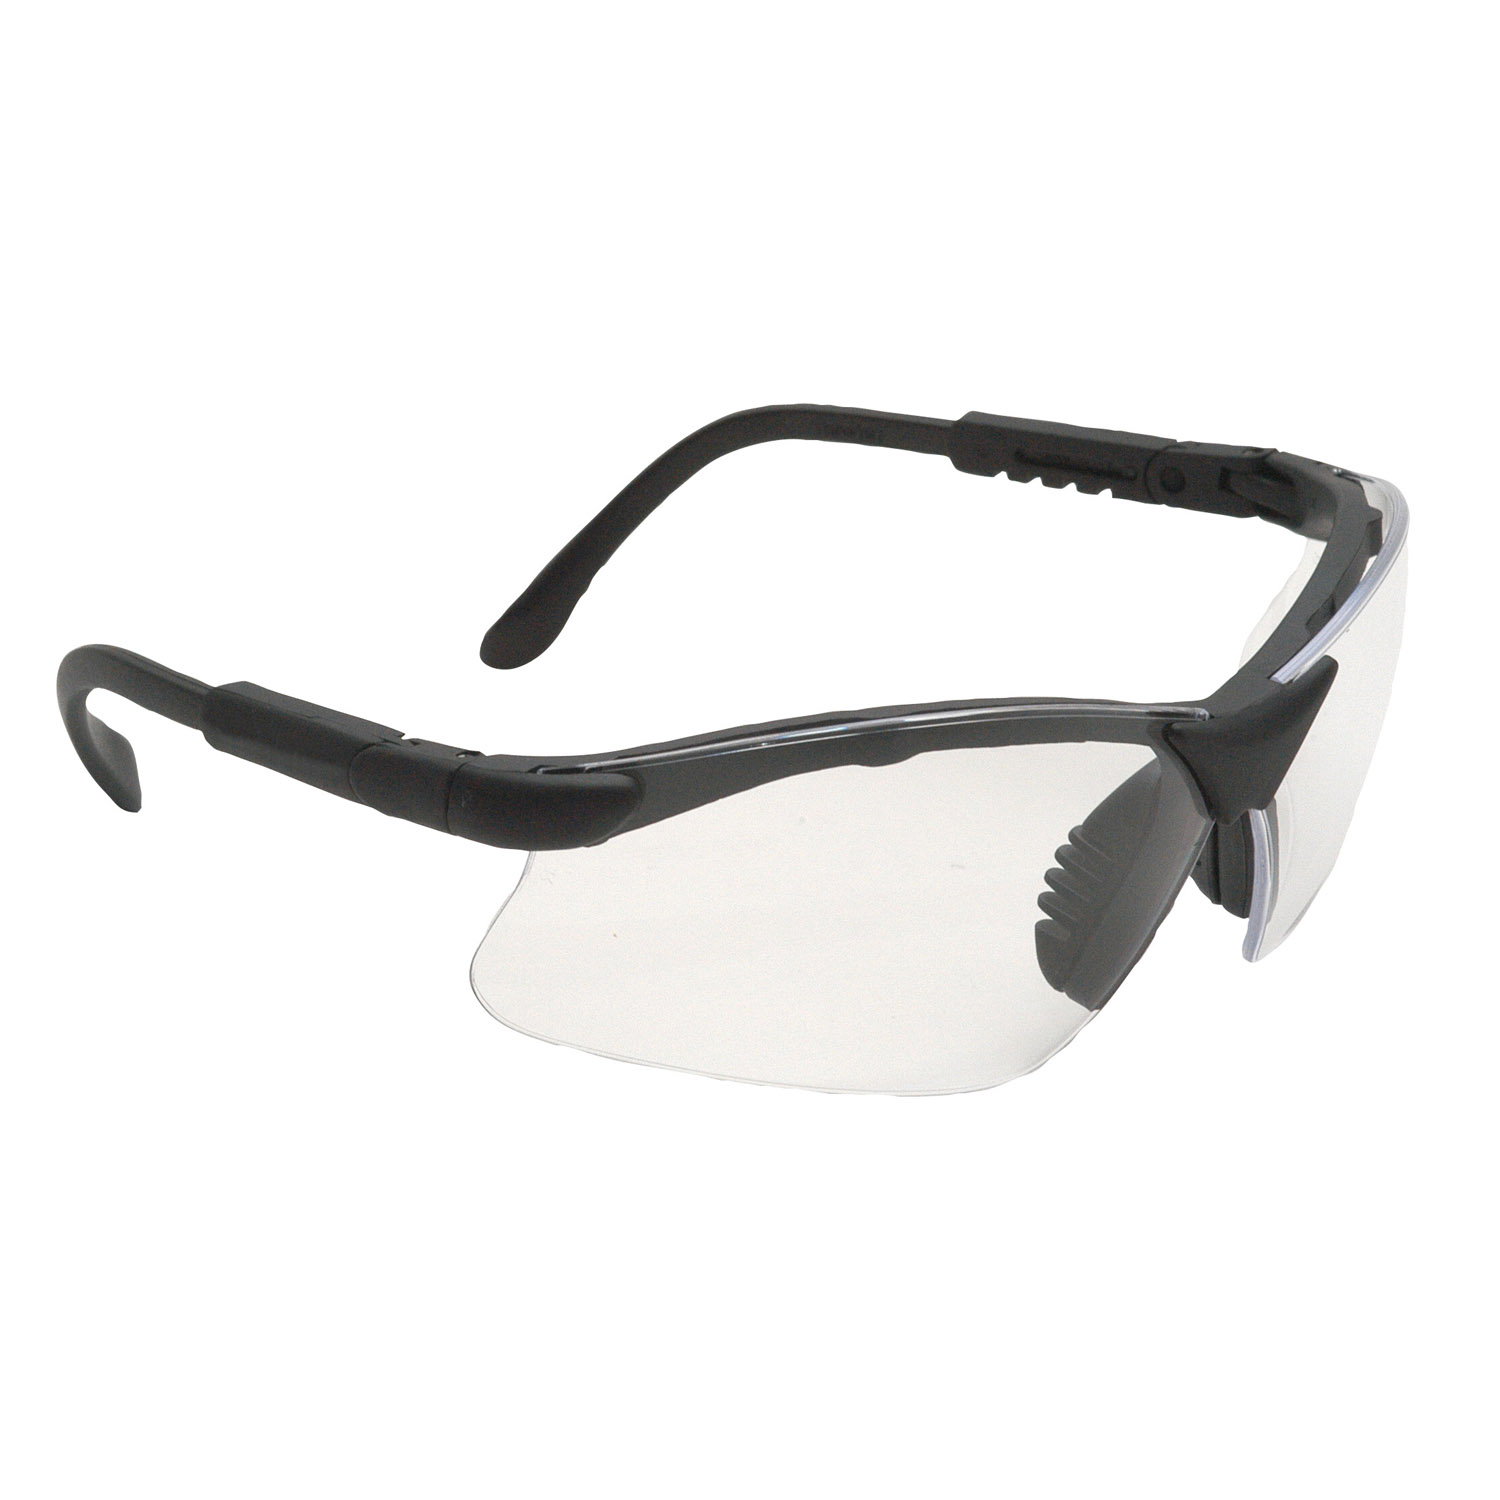 Revelation™ Safety Eyewear - Black Frame - Clear Anti-Fog Lens - Anti-Fog Lens